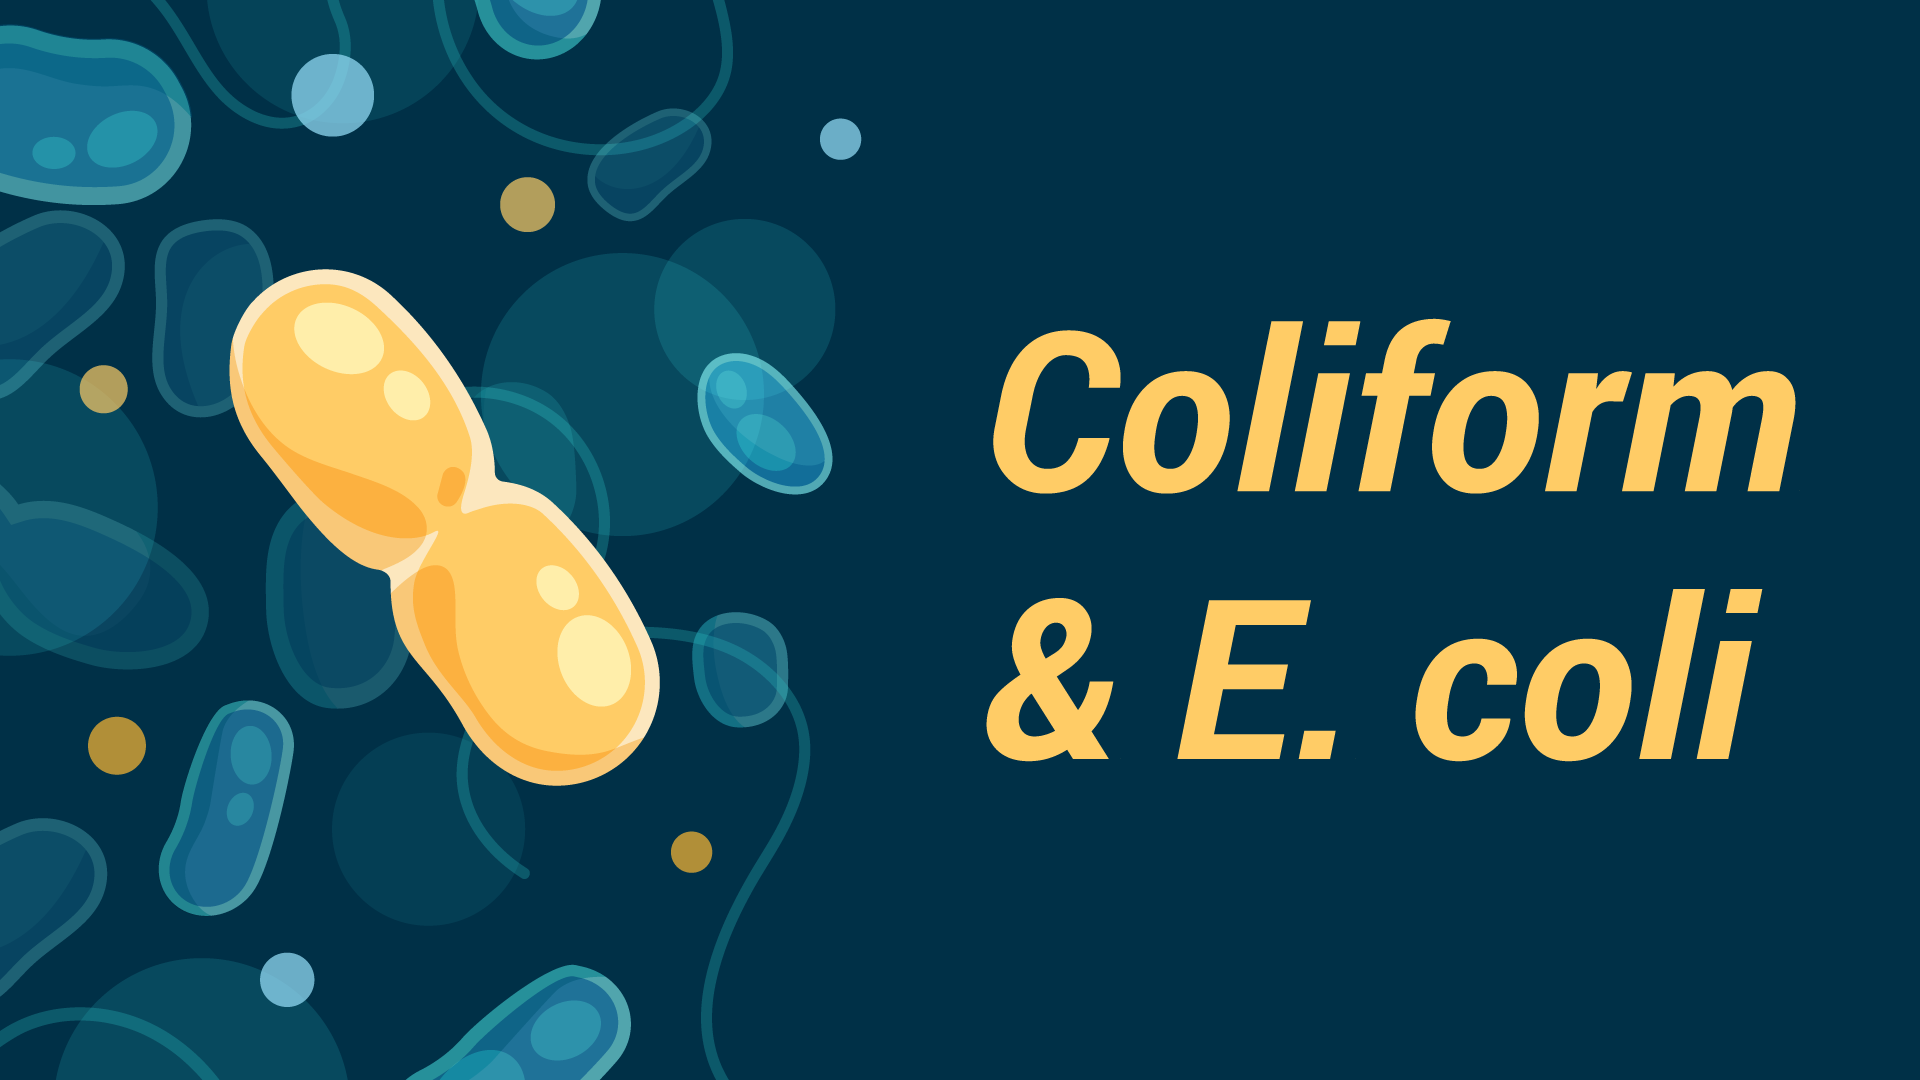 E. coli bacteria in Drinking Water